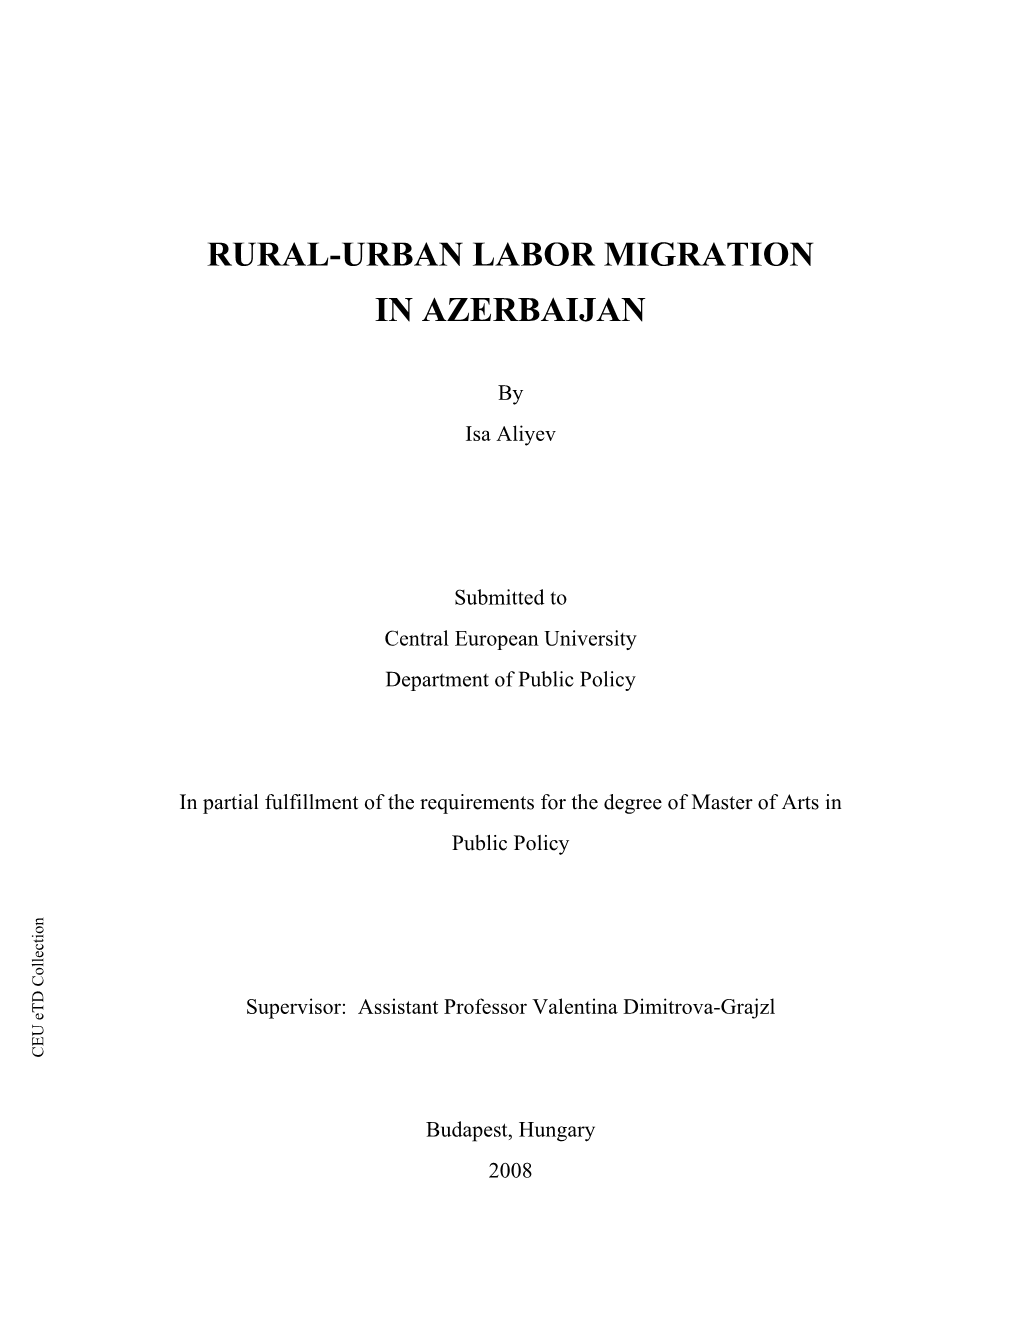 Rural-Urban Labor Migration in Azerbaijan